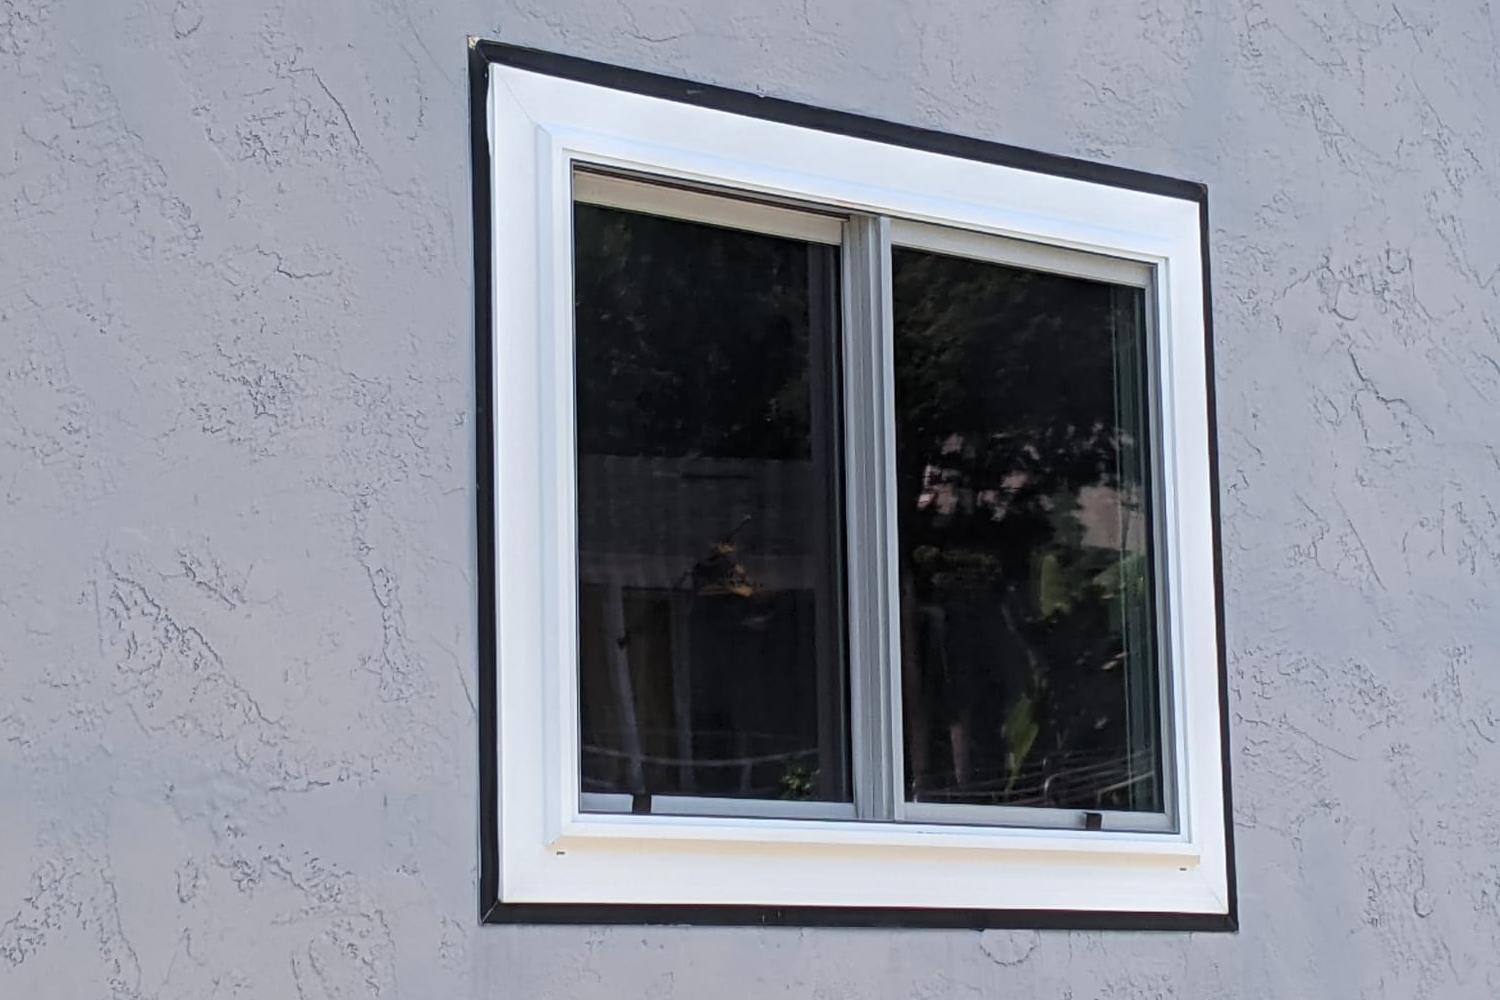 Replacement Window Installation in San Diego 92115